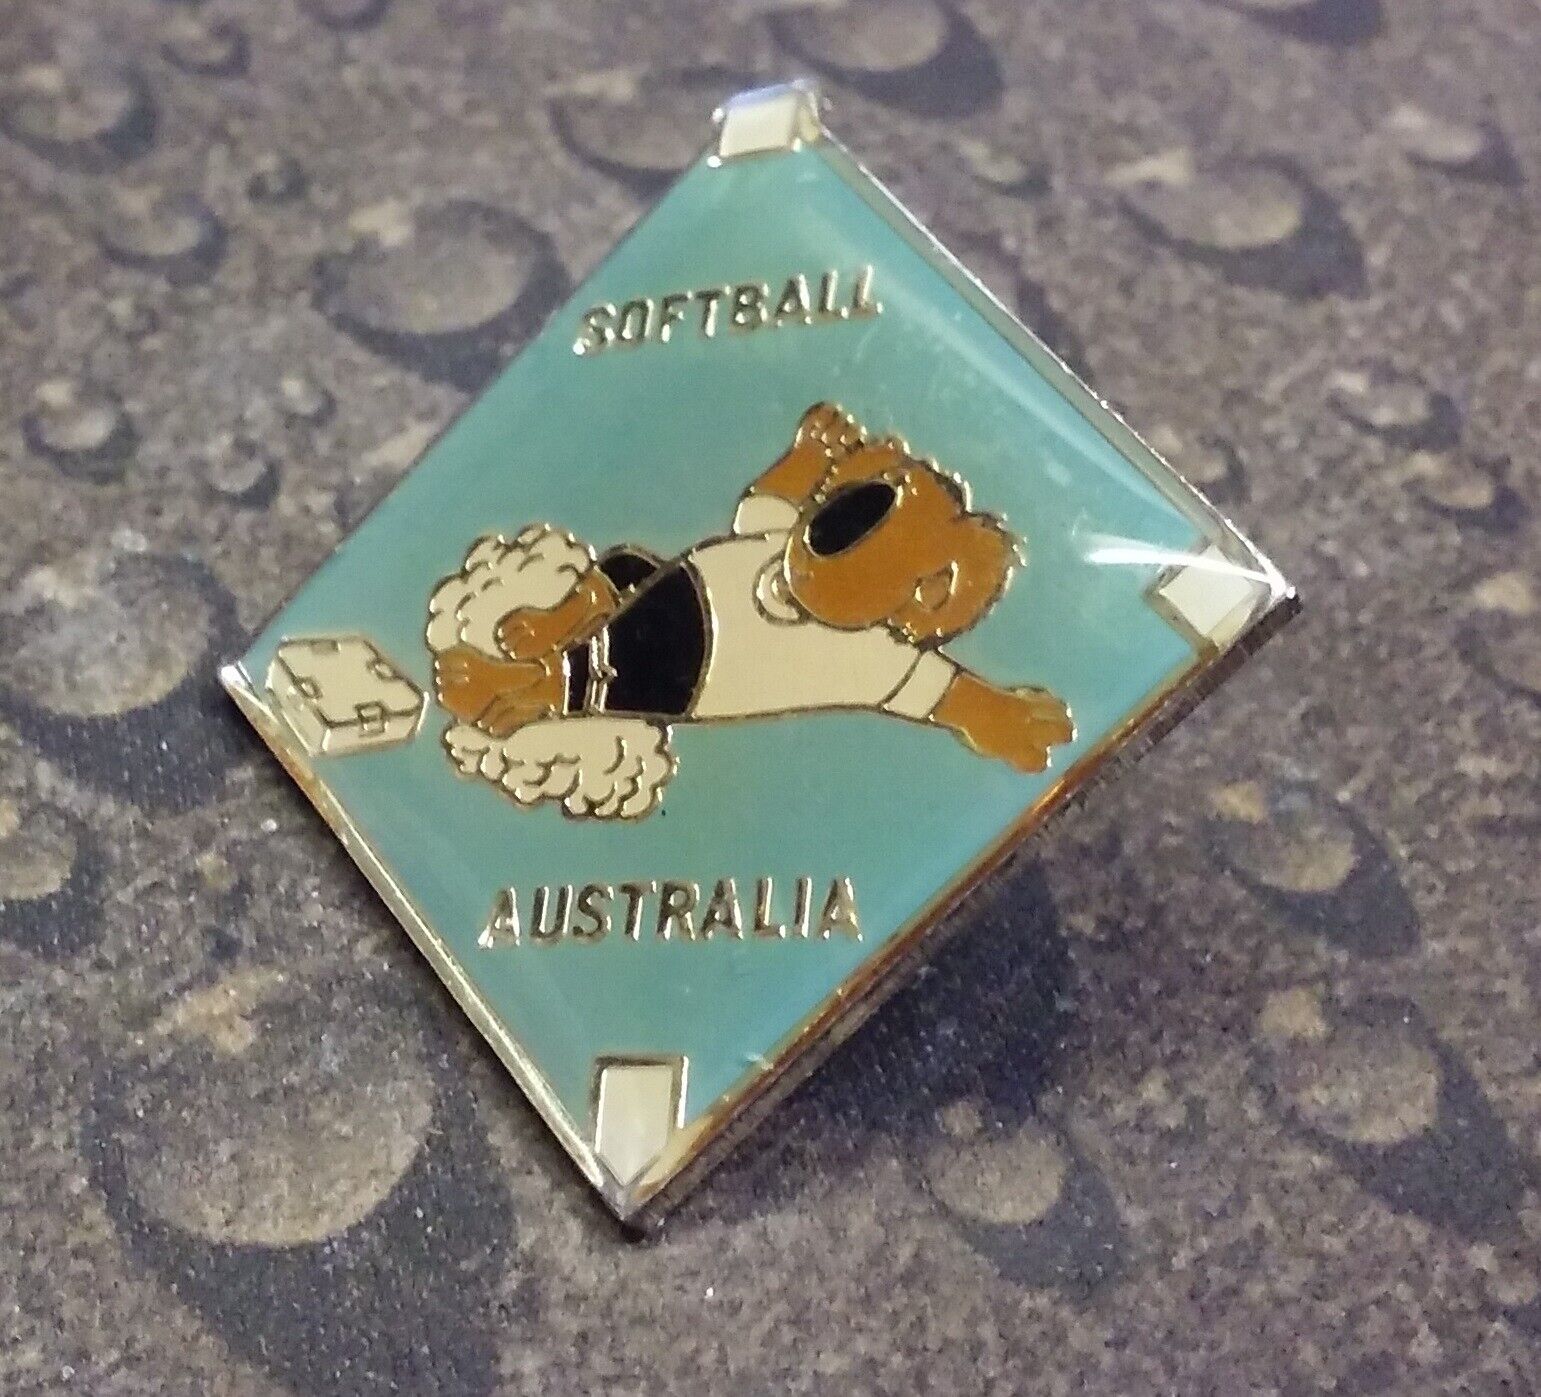 Australia Softball Runner Stealing 3rd Base vintage pin badge 